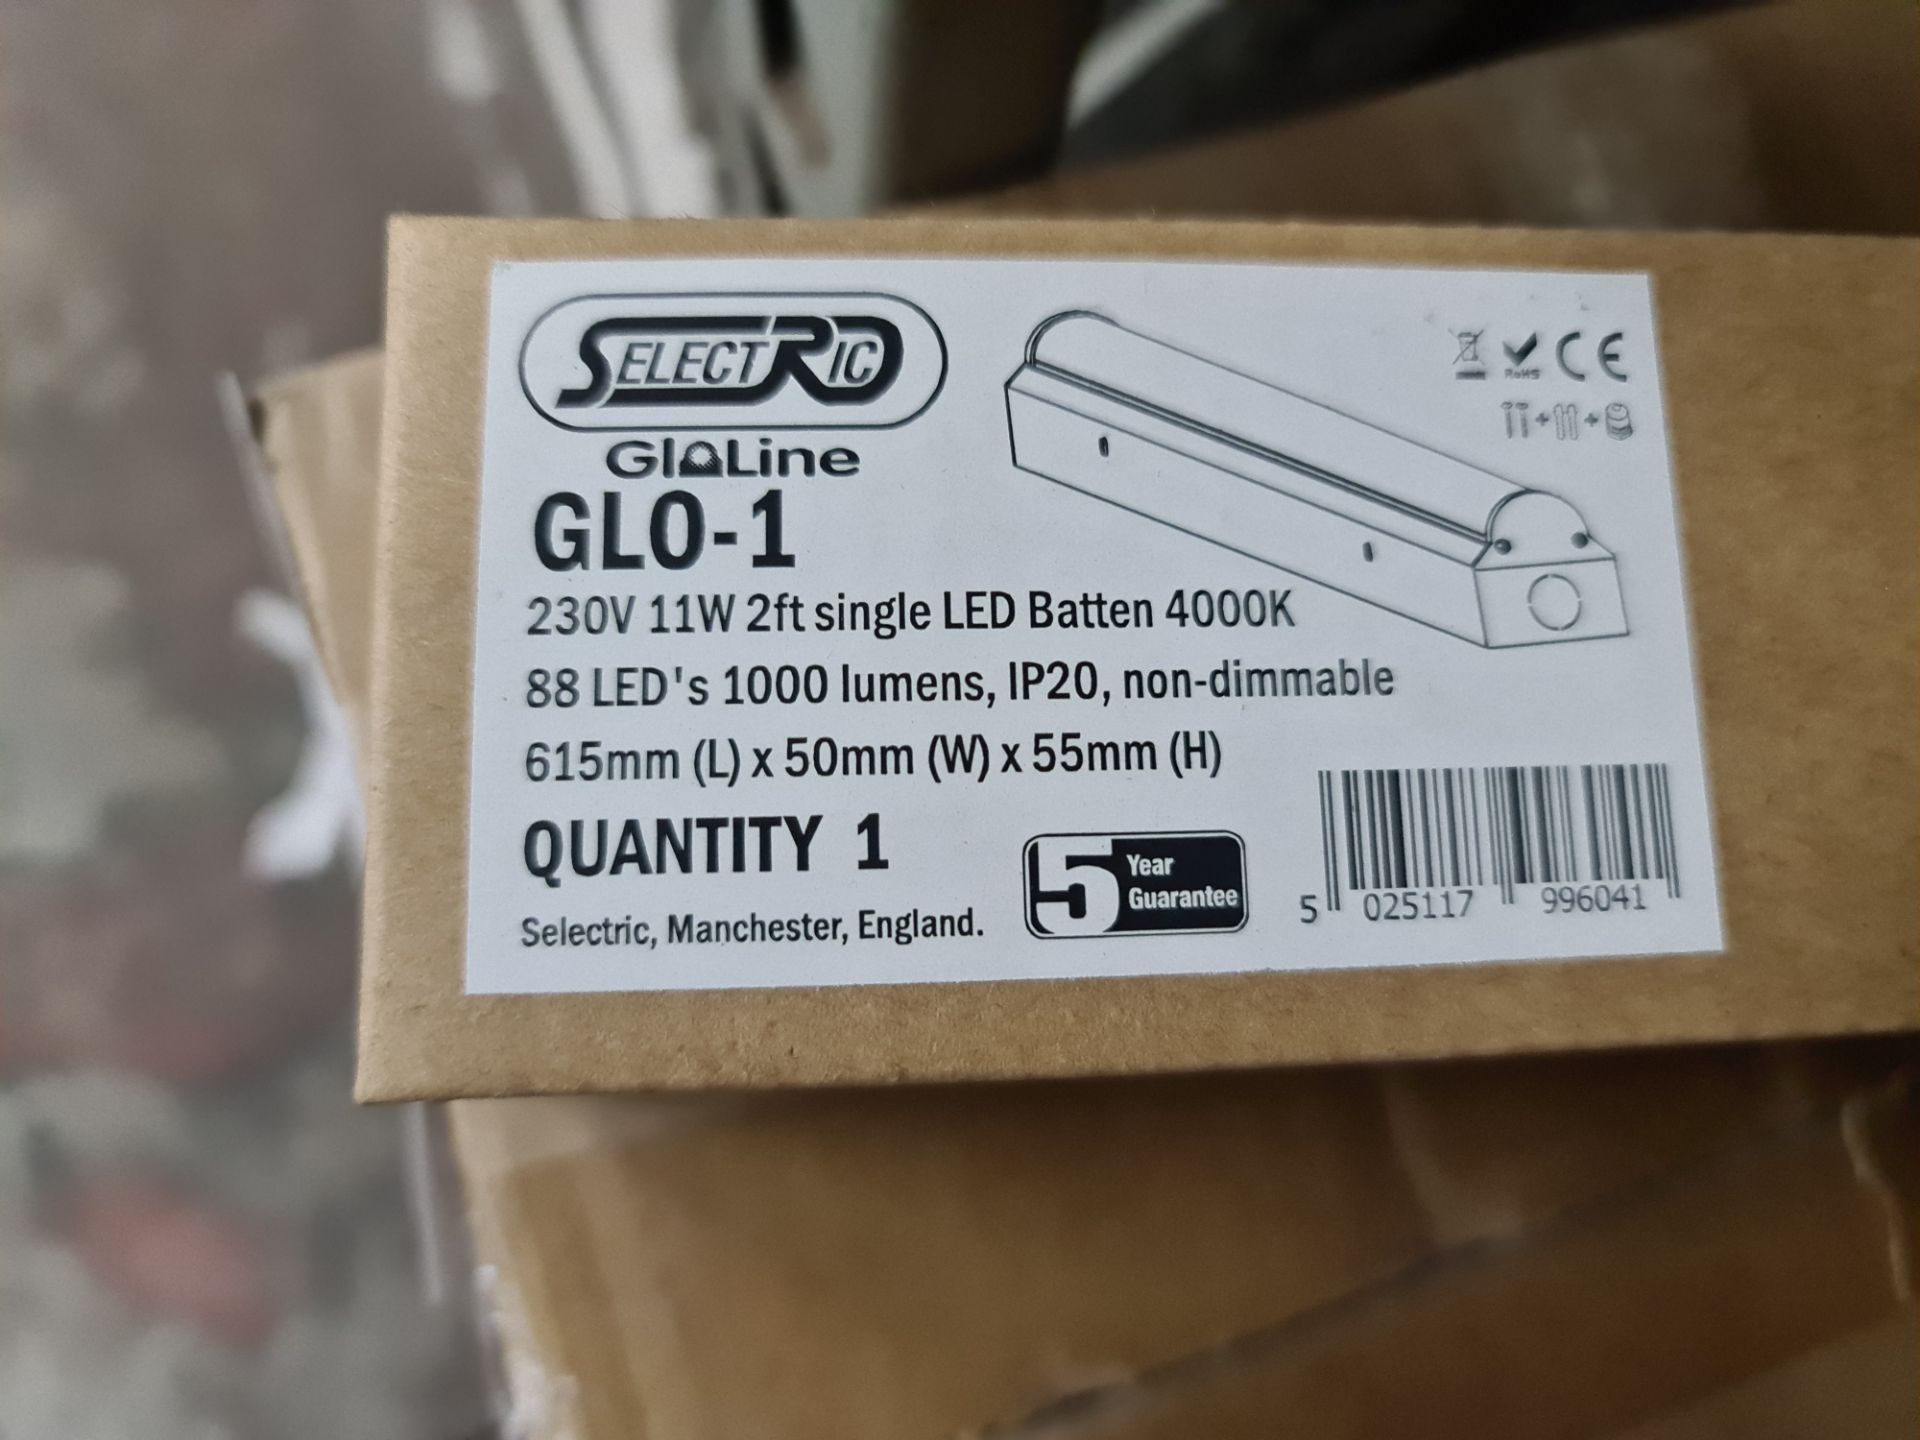 32 off Selectric Gloline model Glo-1 230v 11w 2ft single LED 4000k batten lights, IP20